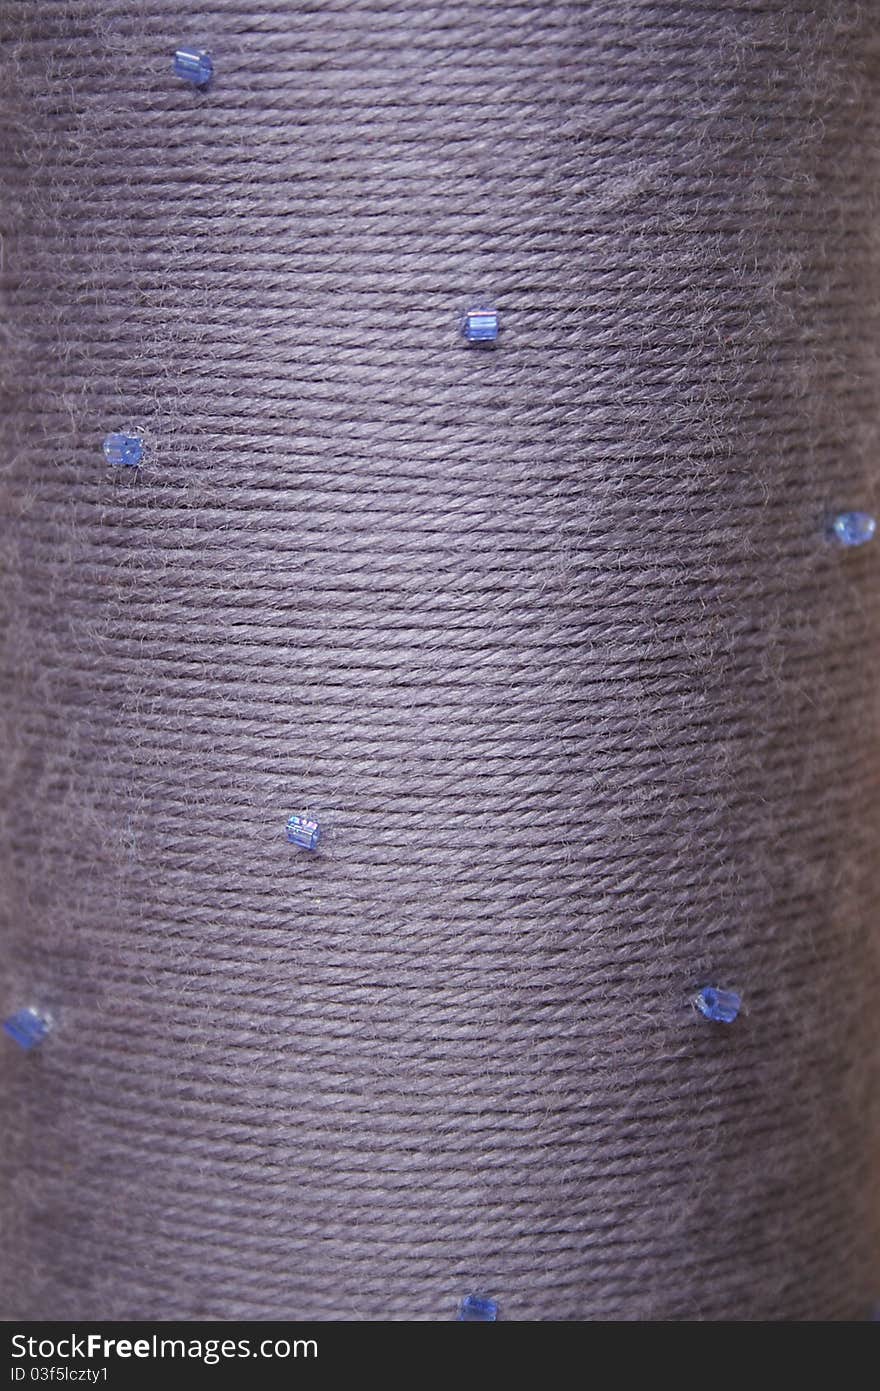 Round texture of grey woolen threads with beads